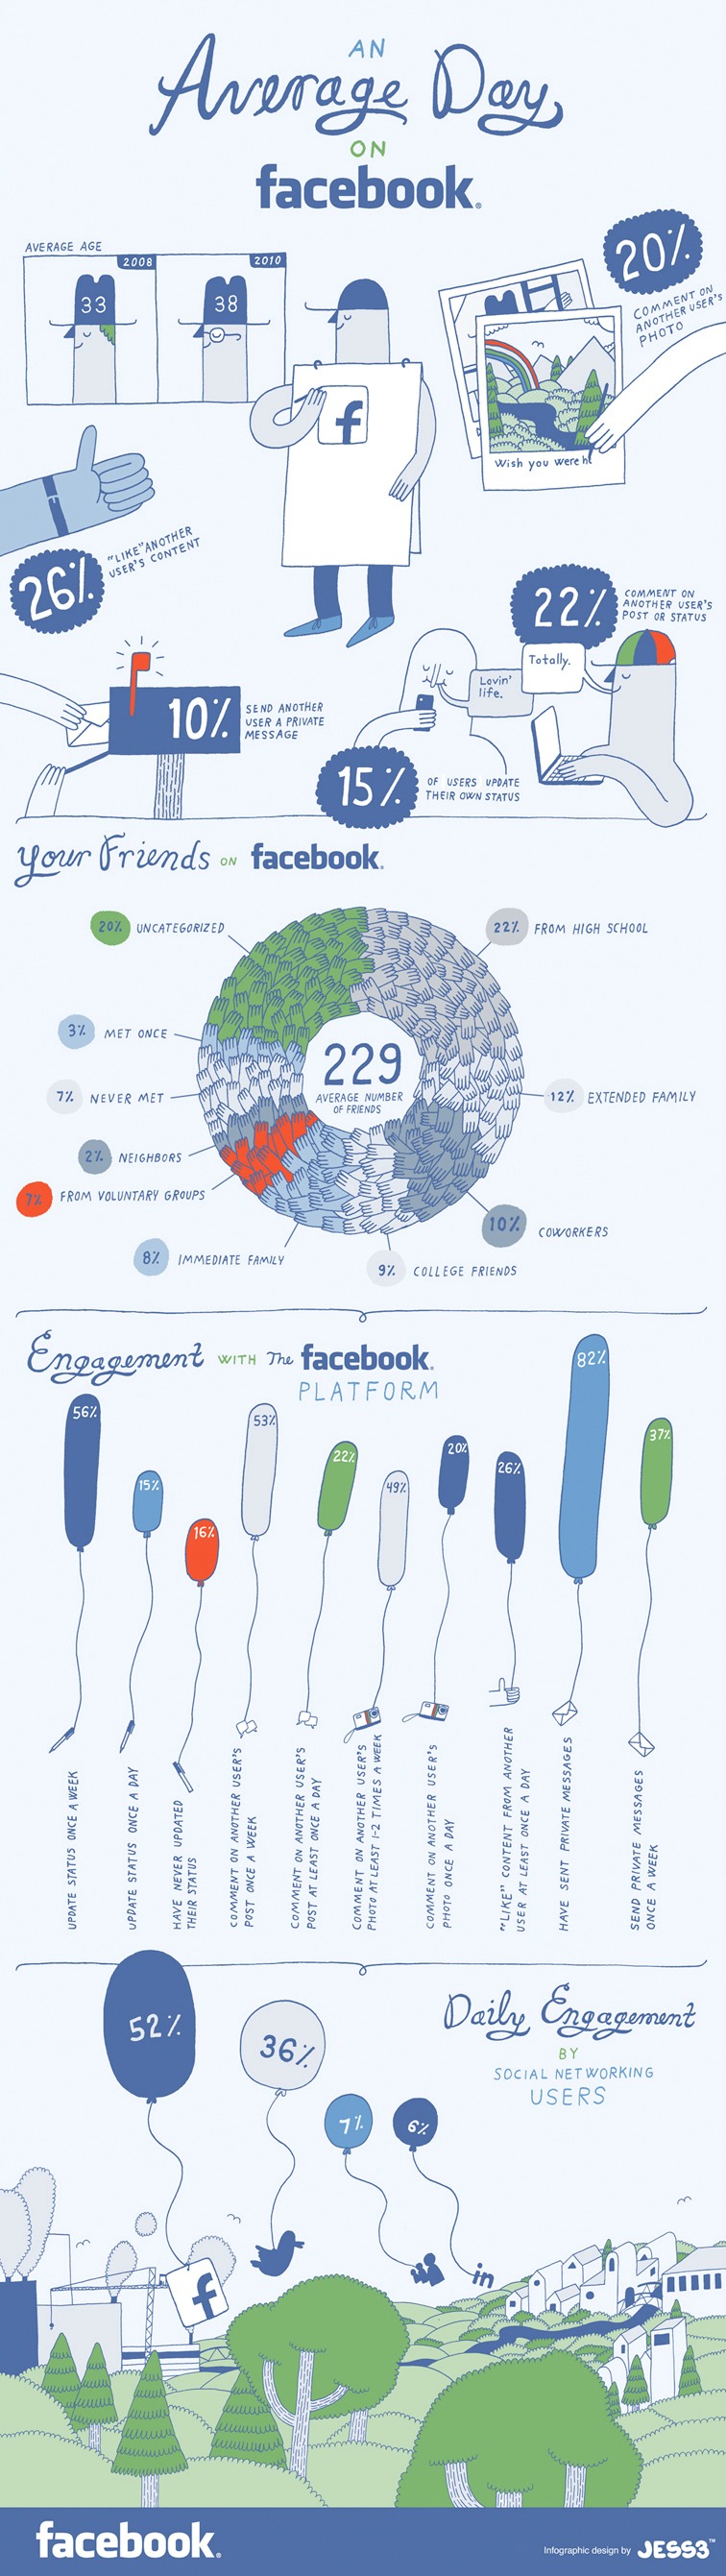 Facebook infographic